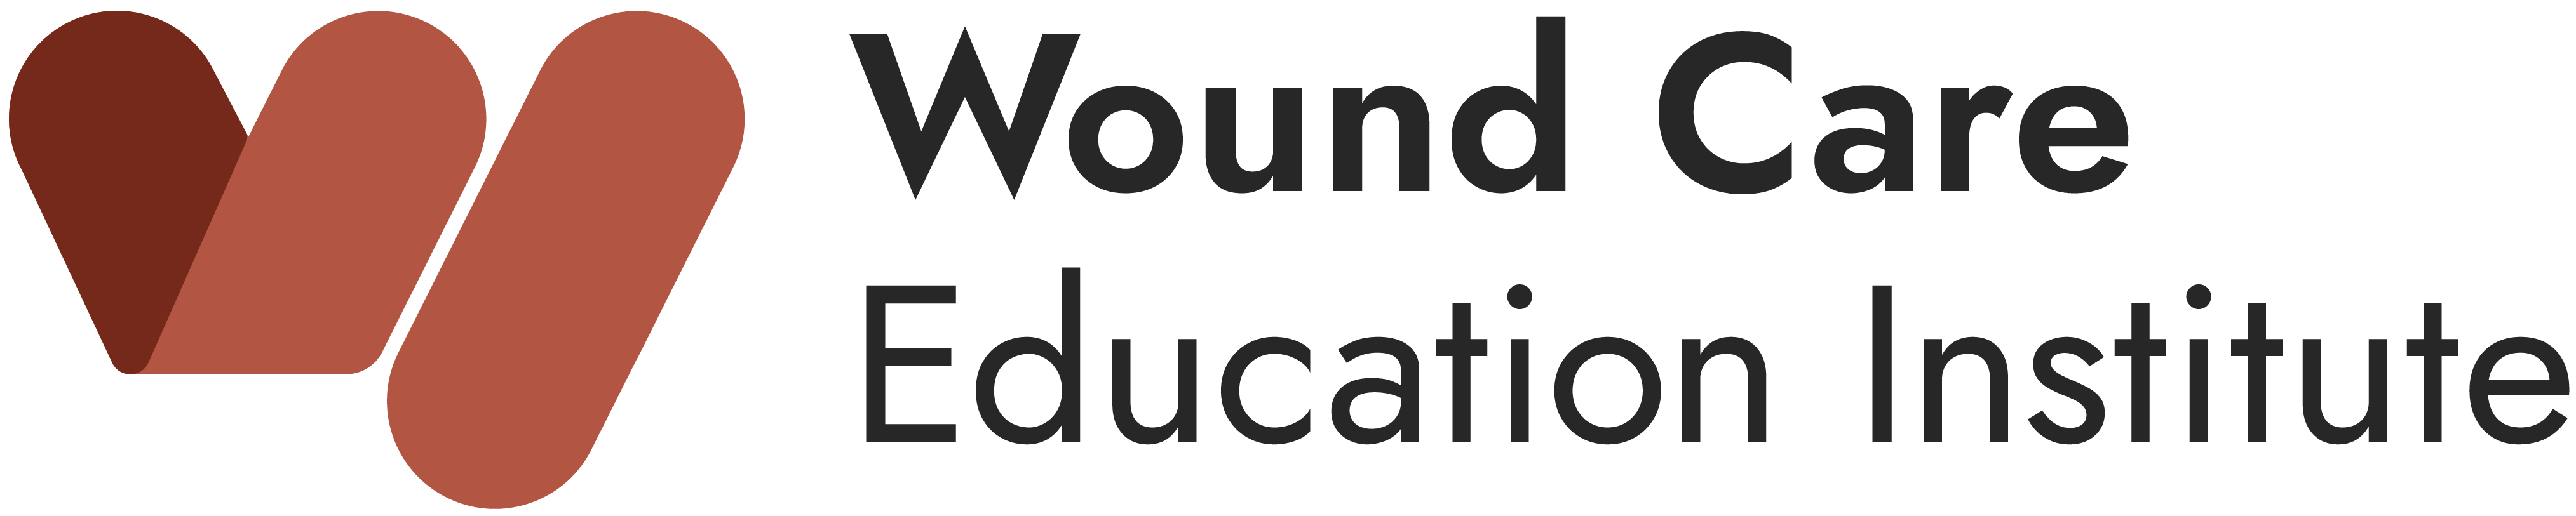 WoundCare Education Institute logo